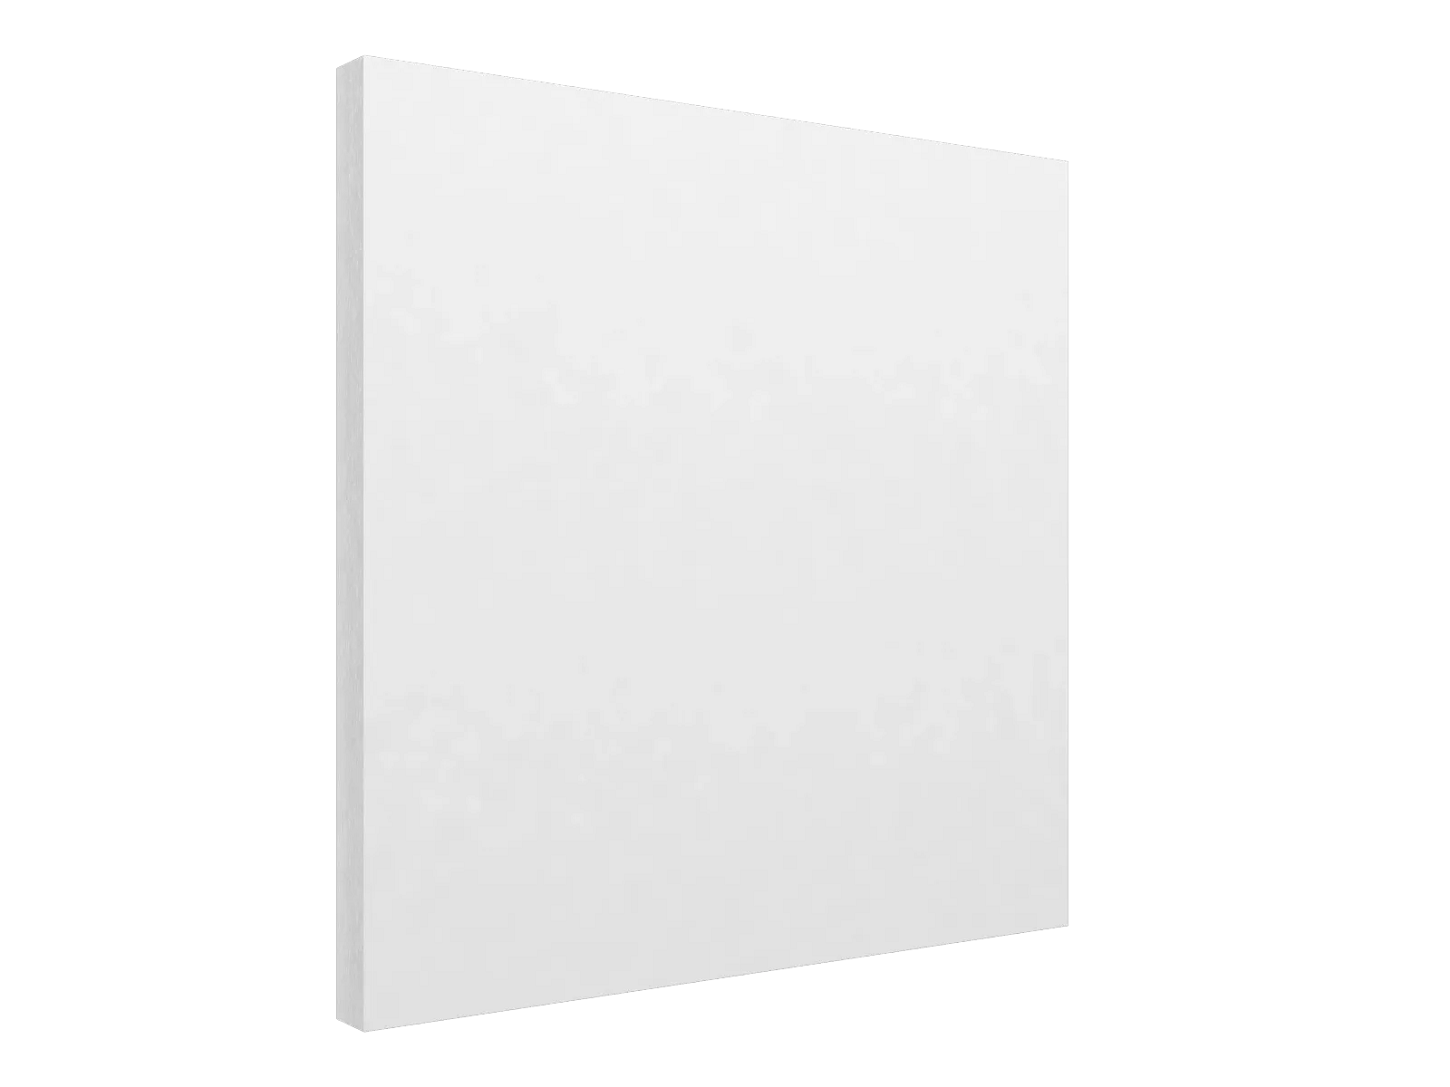 Flat Panel VMT Natural White 40mm 87a (Box of 8 pcs)